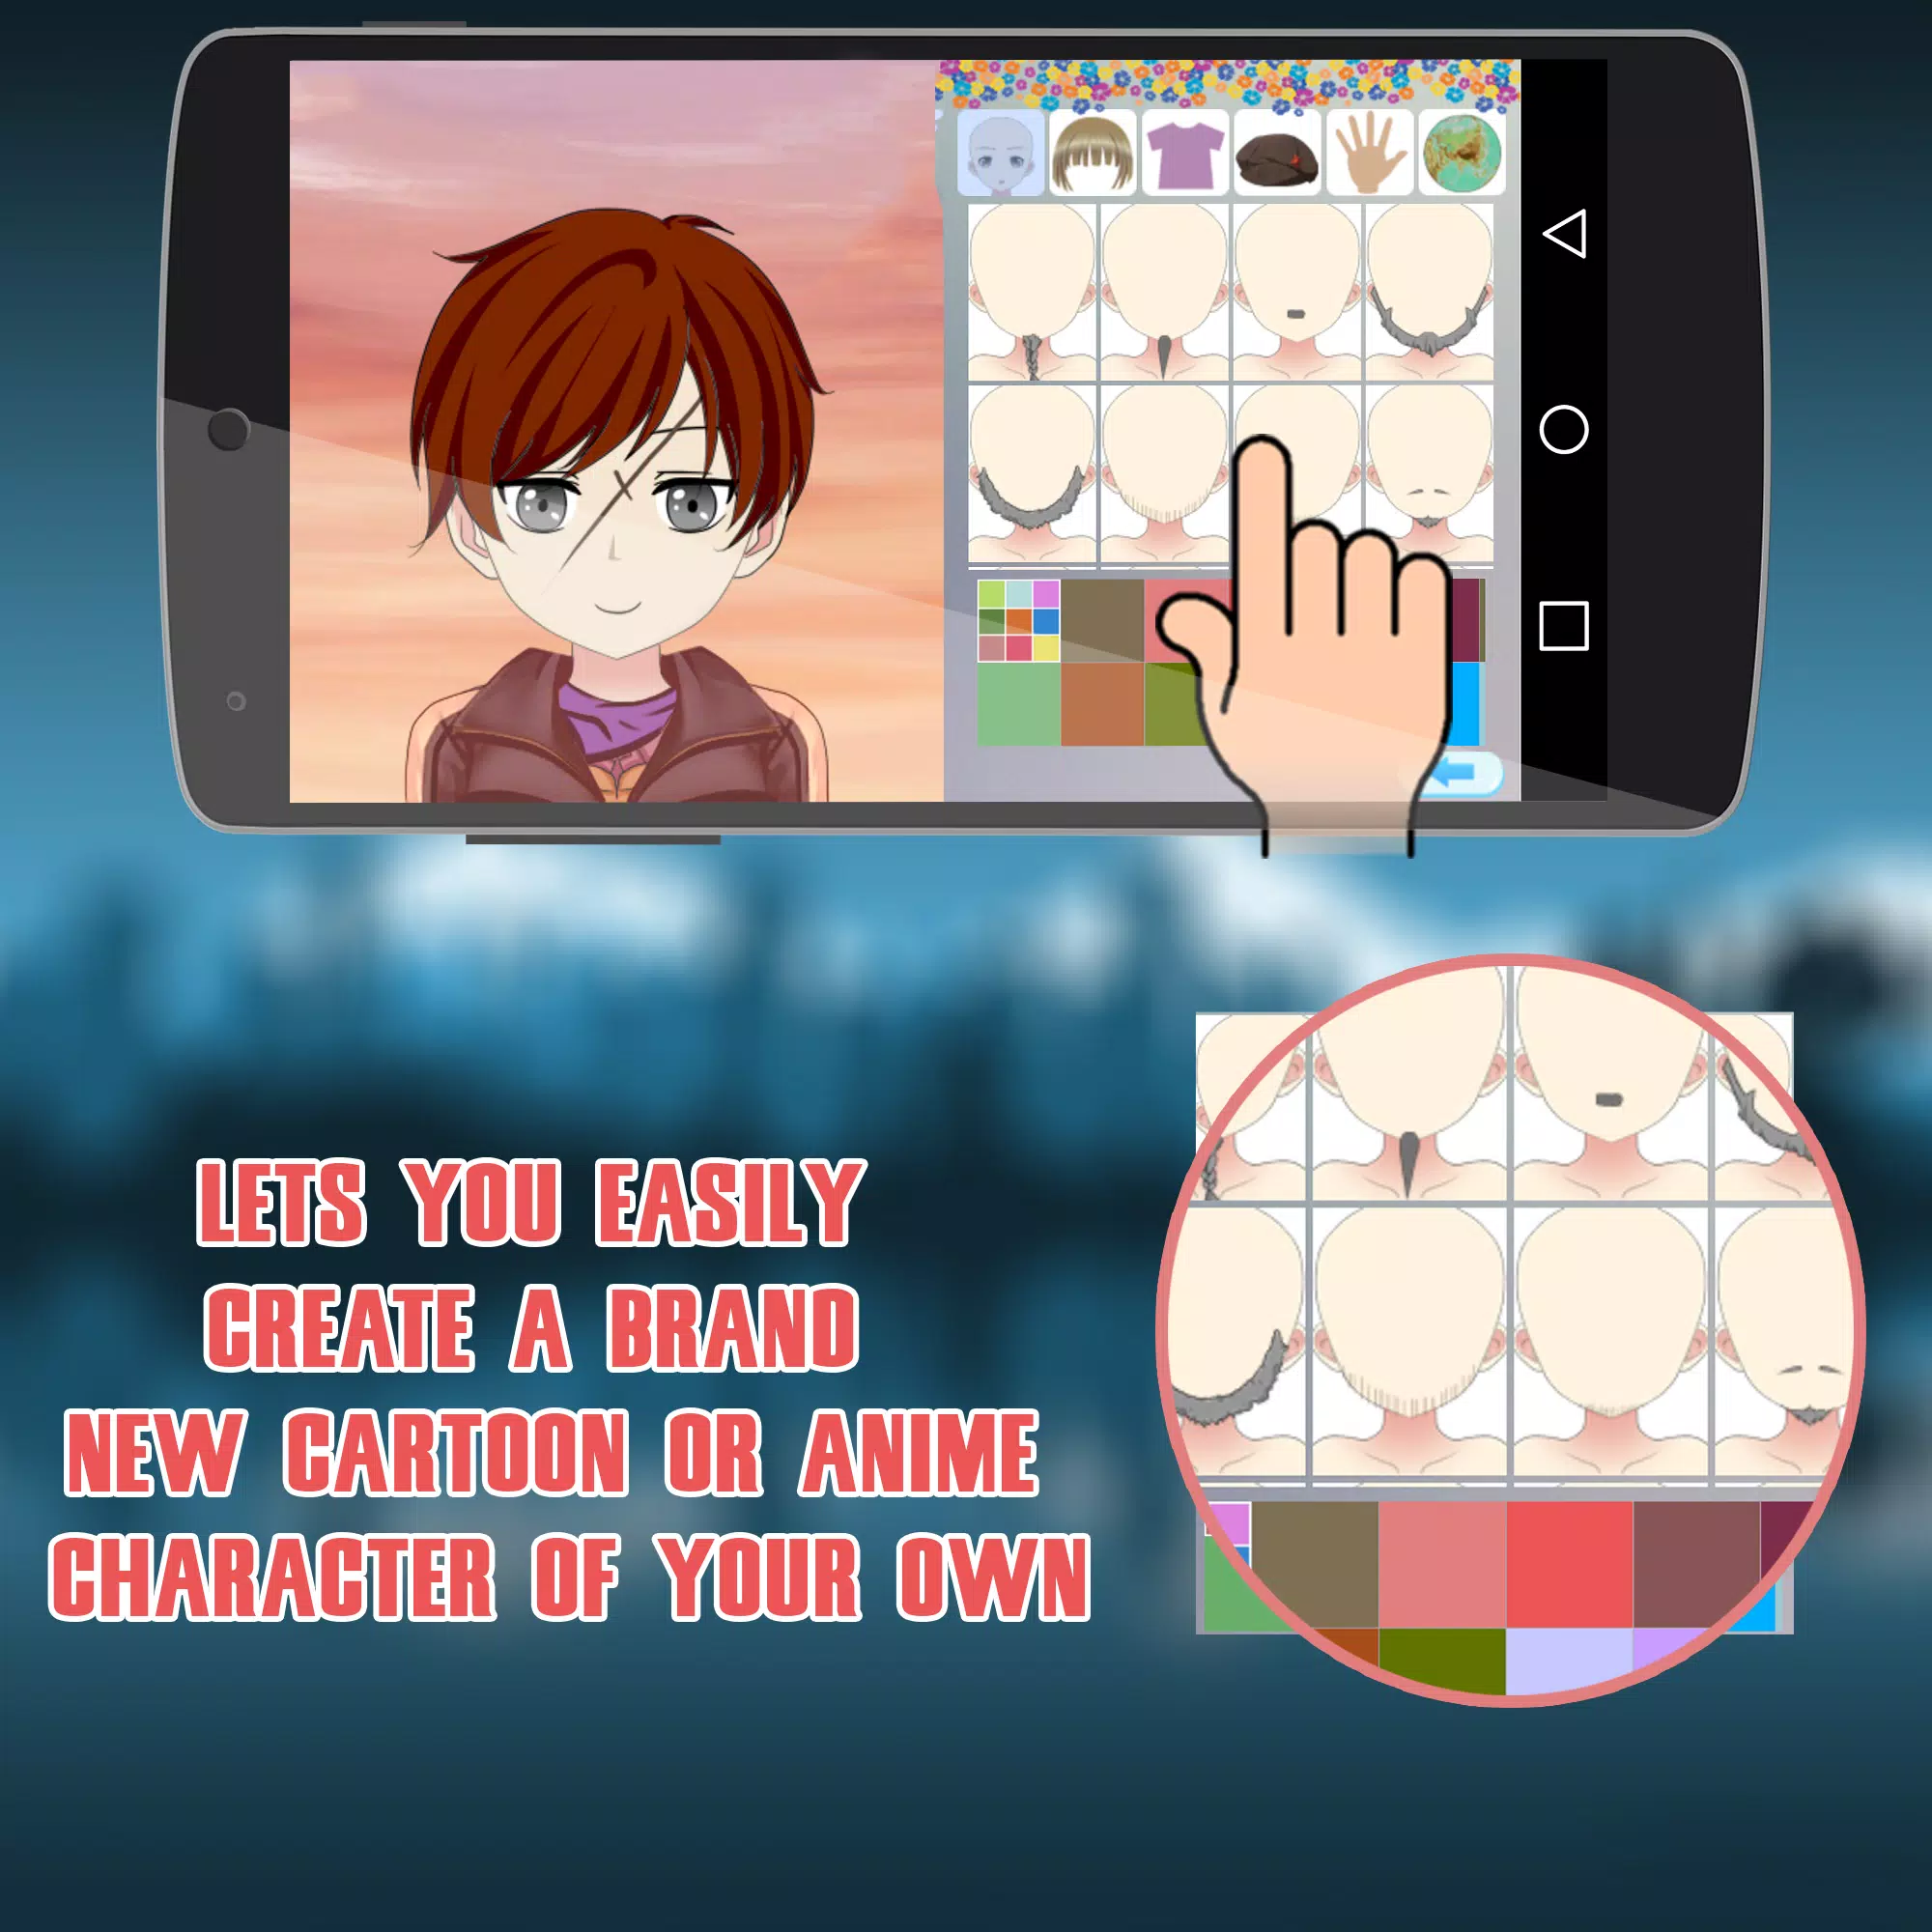 Animes Online 1.0.0 APK Download - blog.animeson.app